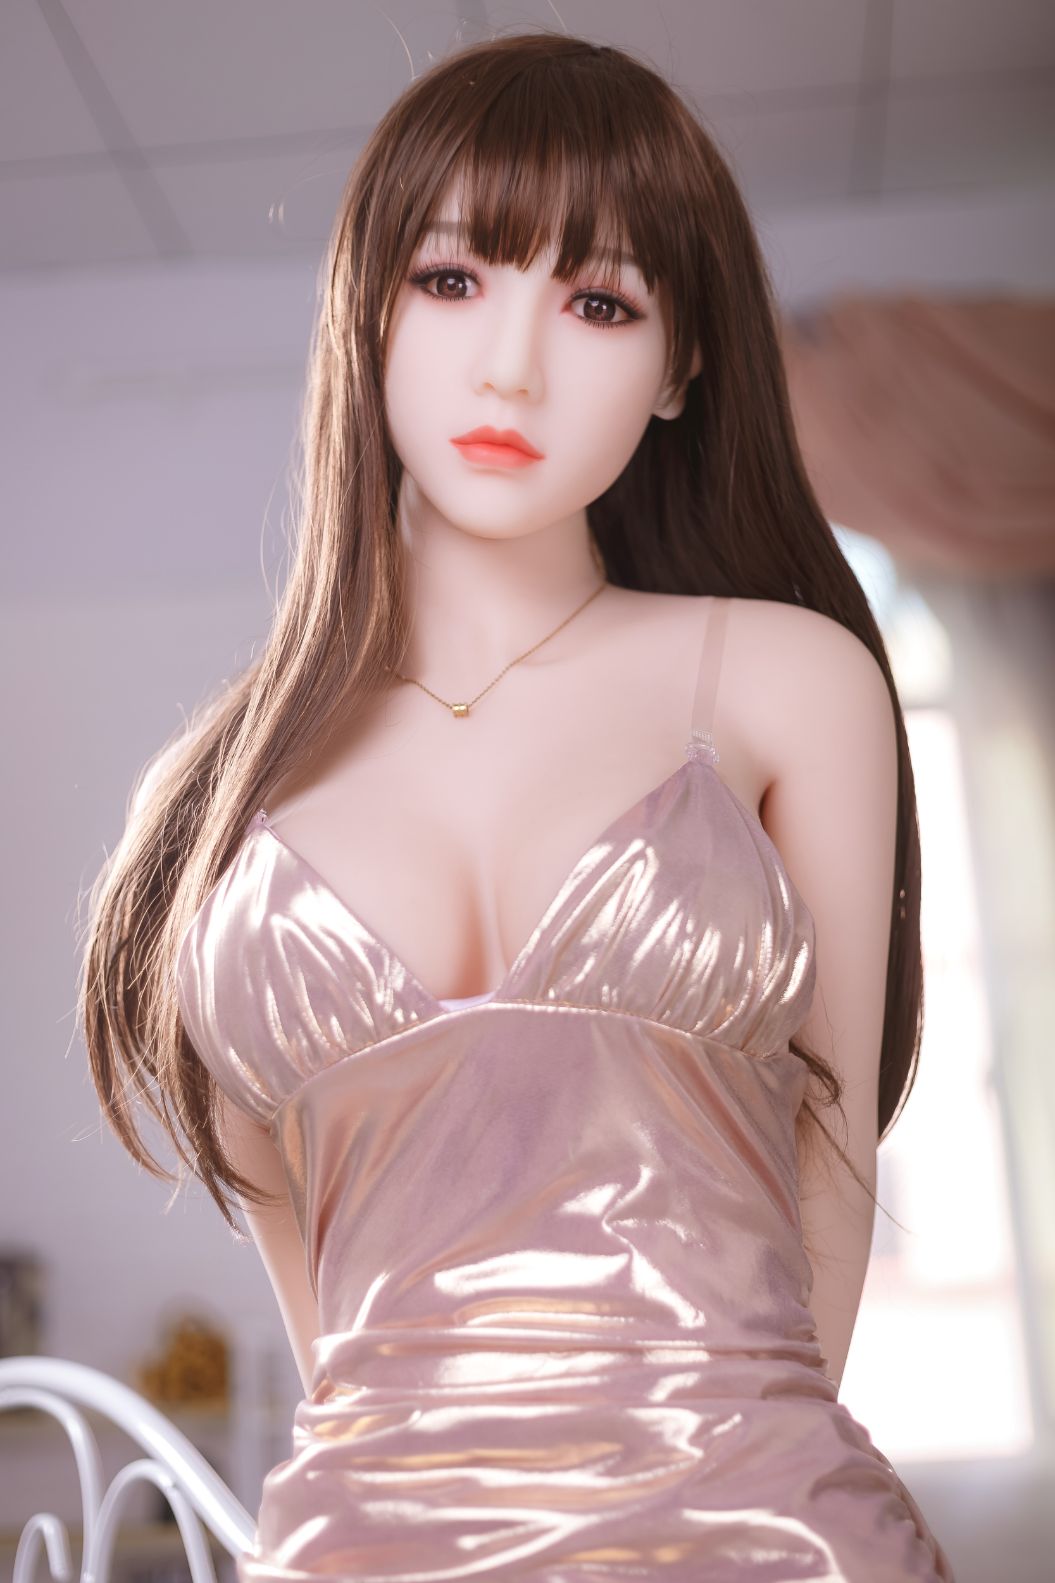 Neodoll Girlfriend Hanna - Realistic Sex Doll - 165cm - Natural